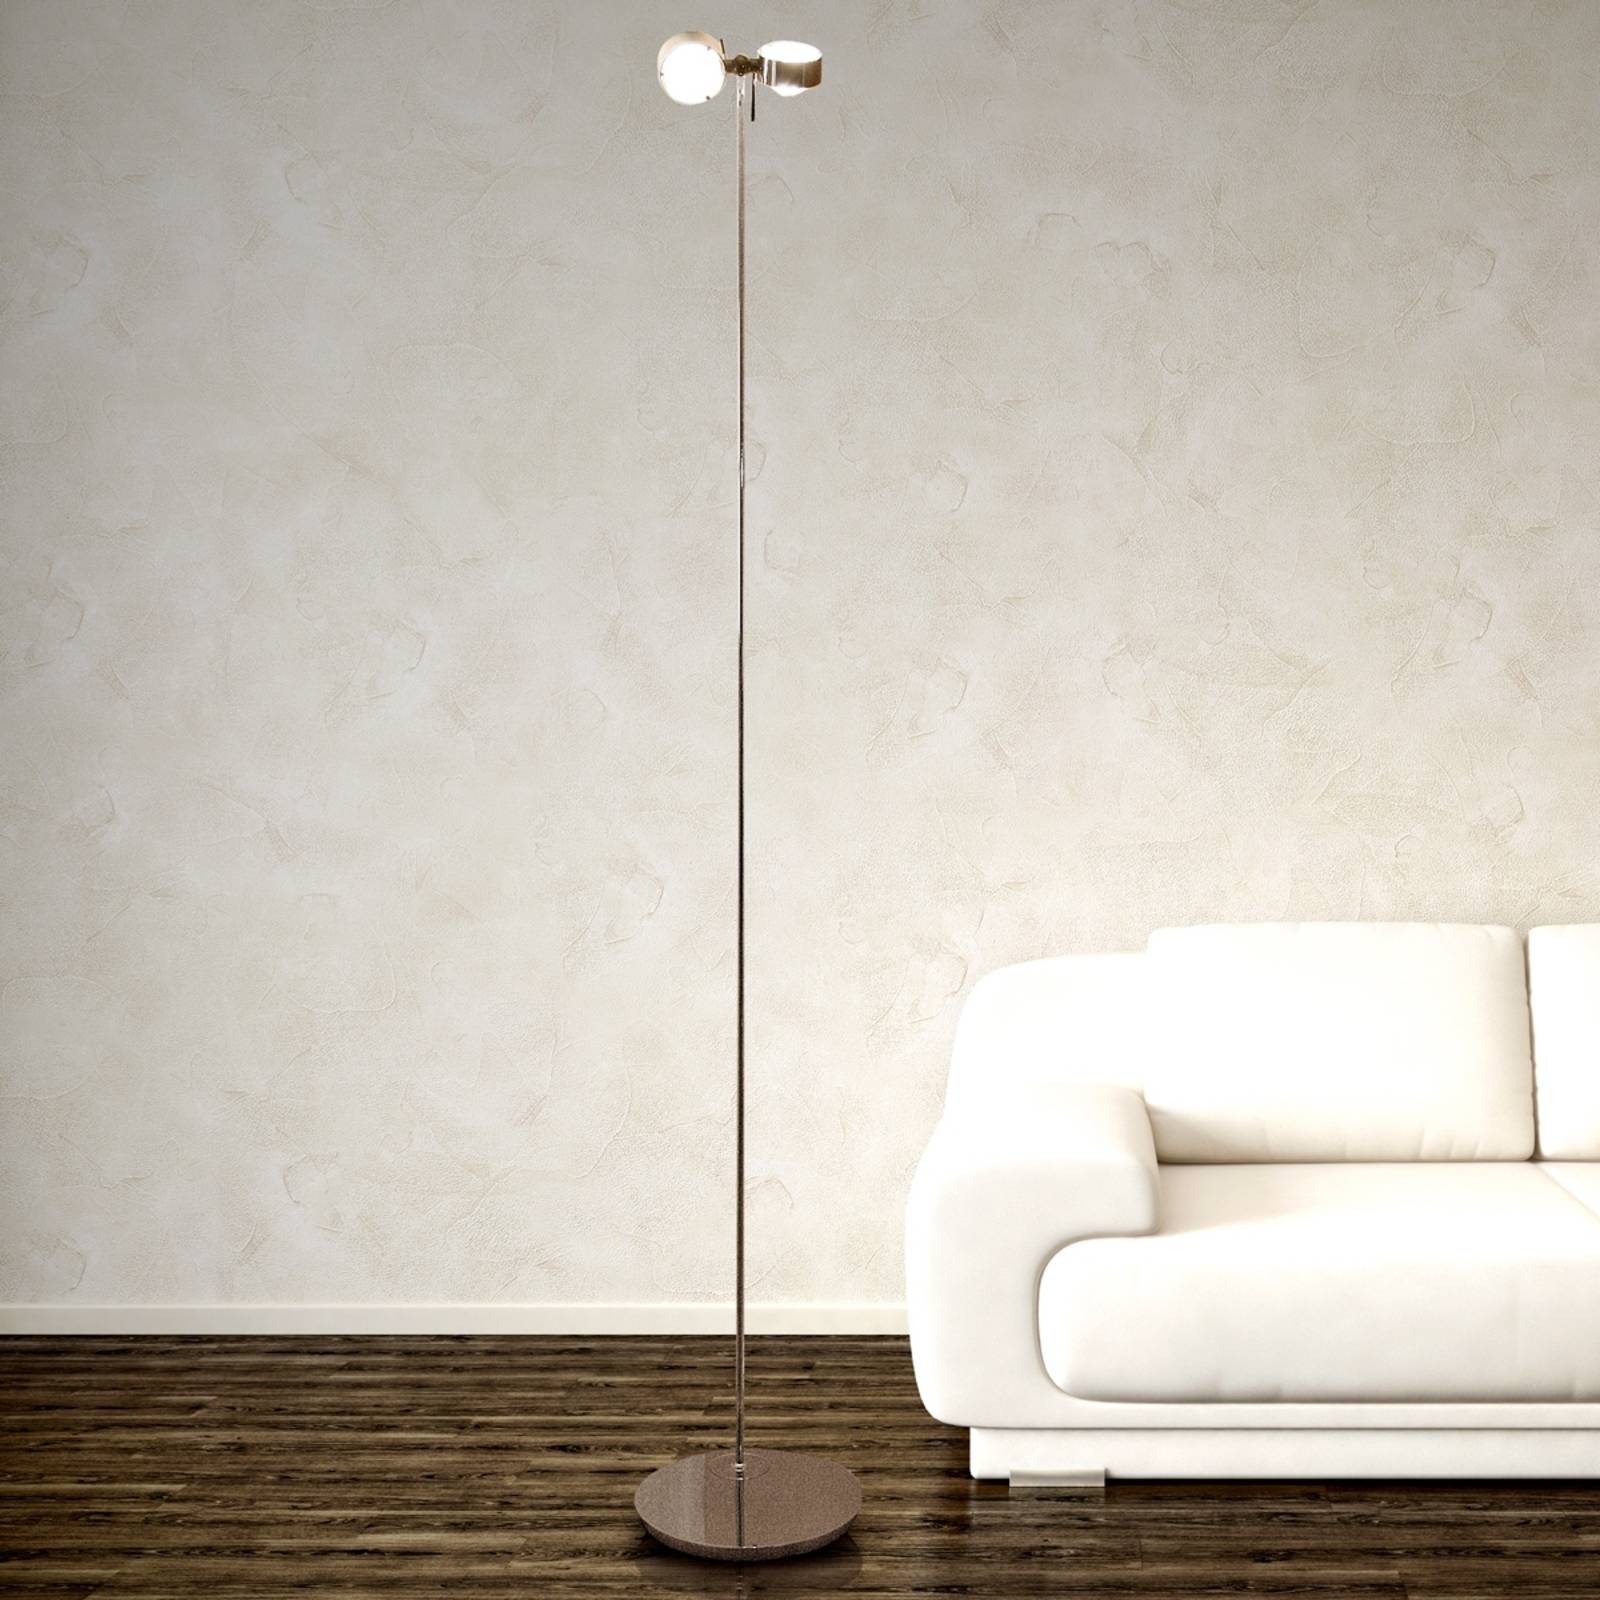 E-shop Flexibilná stojacia lampa PUK FLOOR, matný chróm, 2 svetlá.